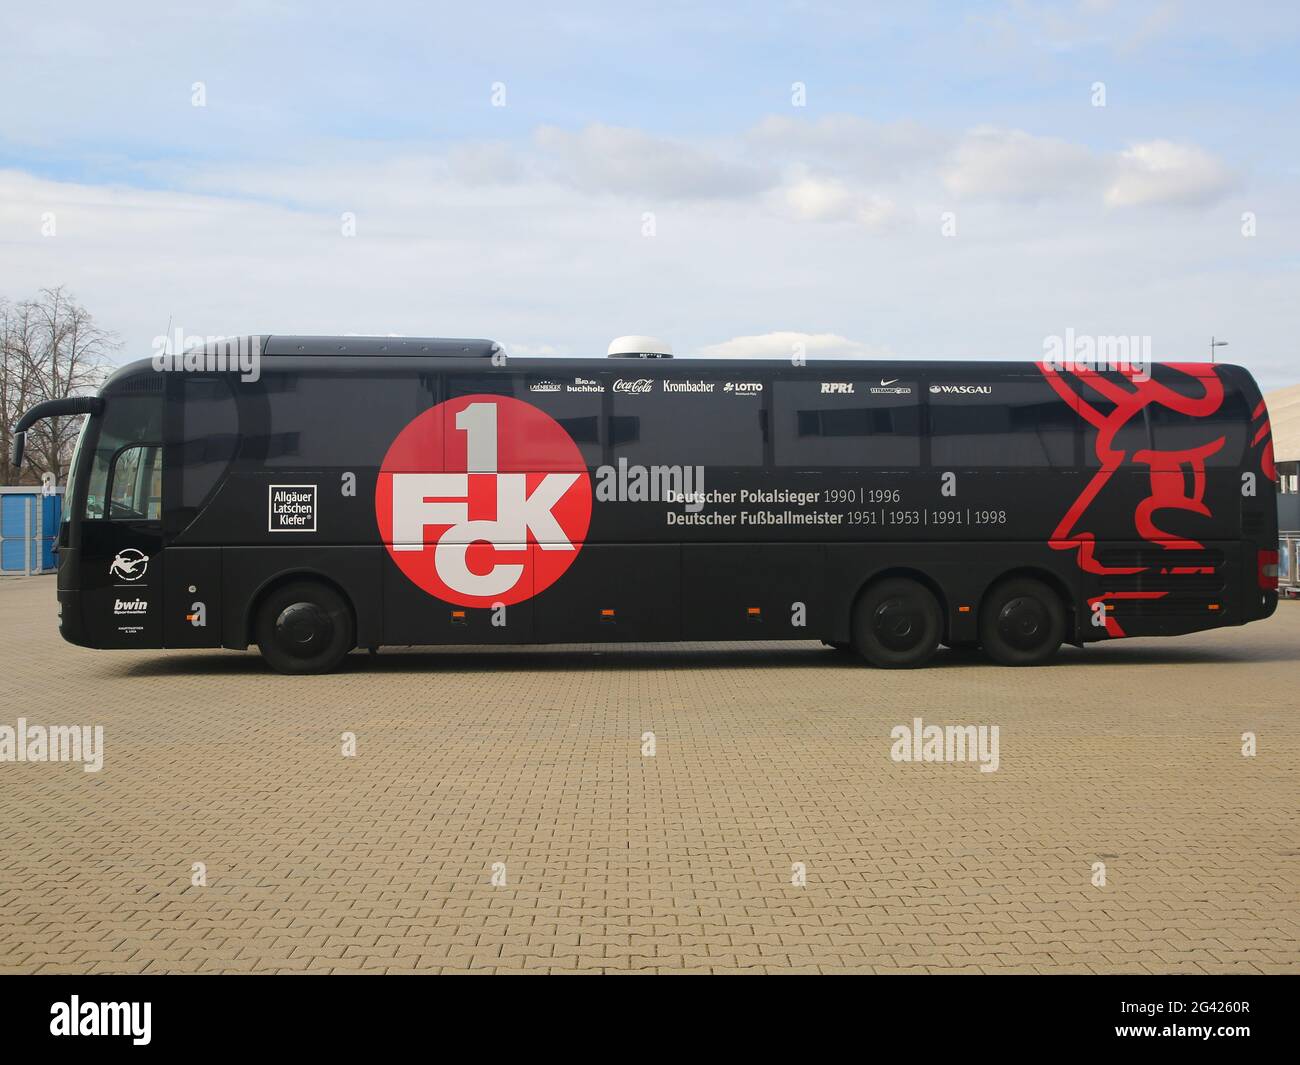 Team bus con logo club 1.FC Kaiserslautern DFB 3.Liga stagione 2020-21 Foto Stock